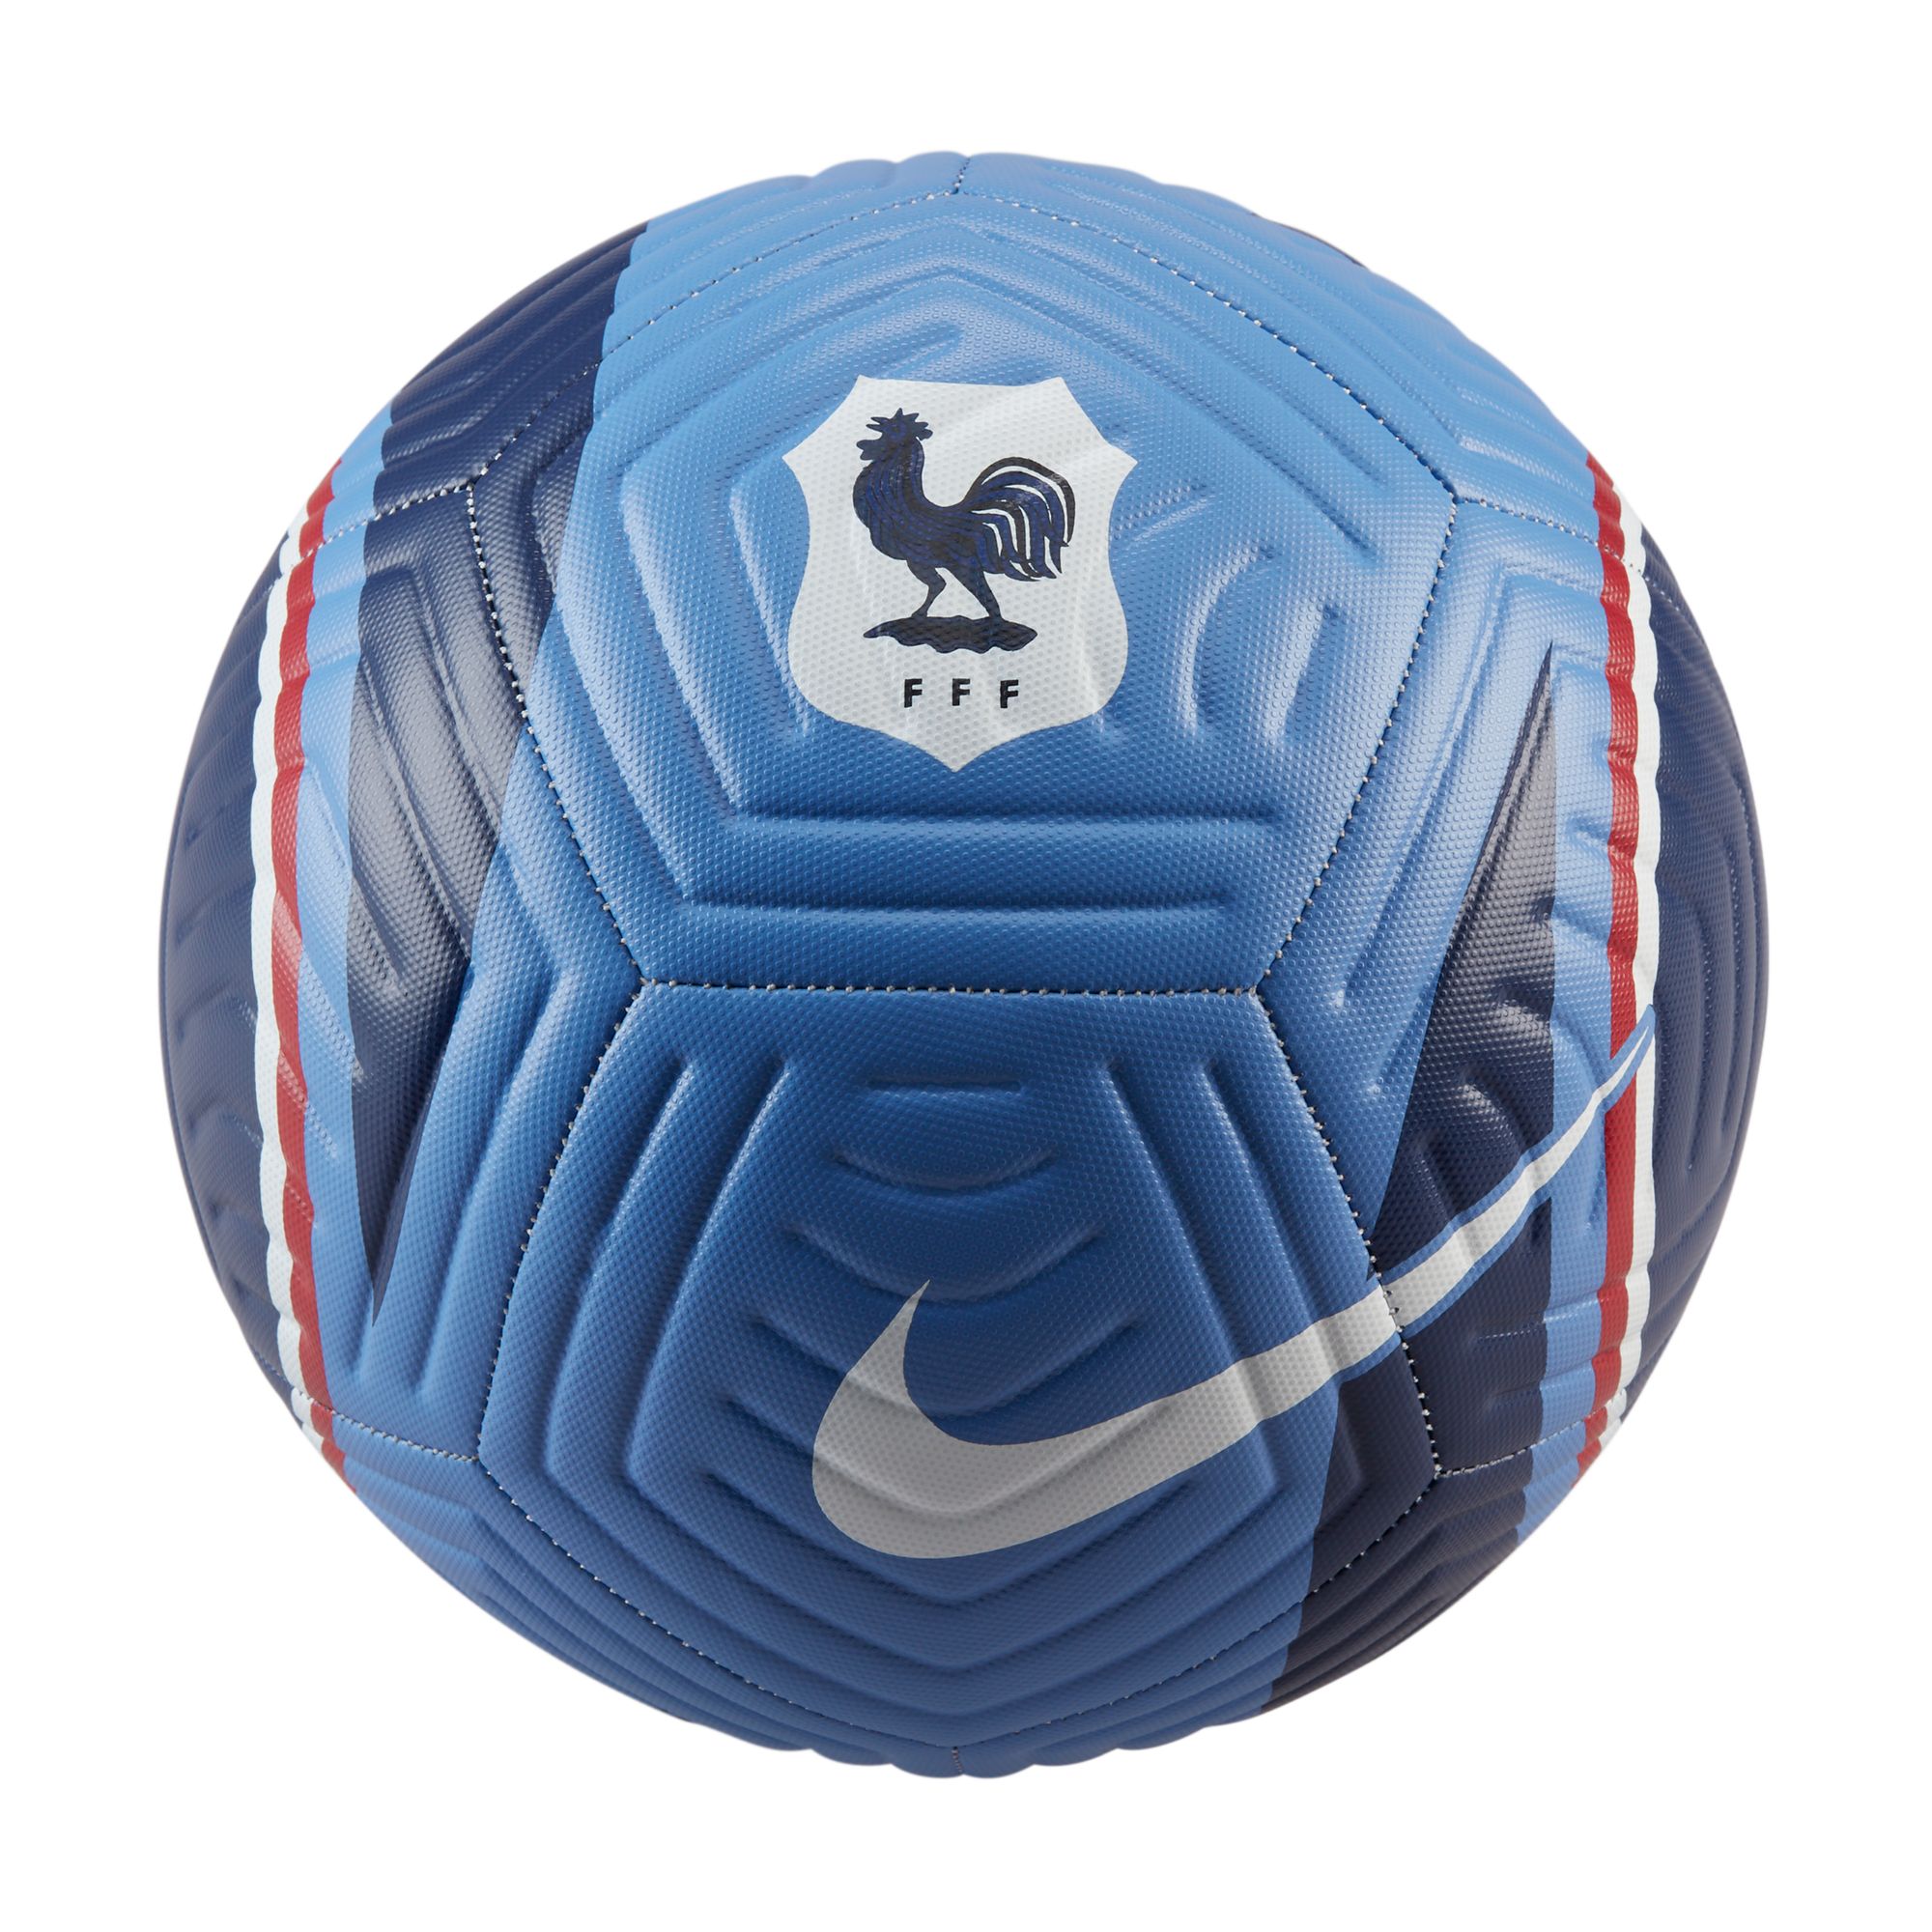 Fiesta Tamano relativo retorta Stefans Soccer - Wisconsin - Nike France Academy Ball - Blue / White